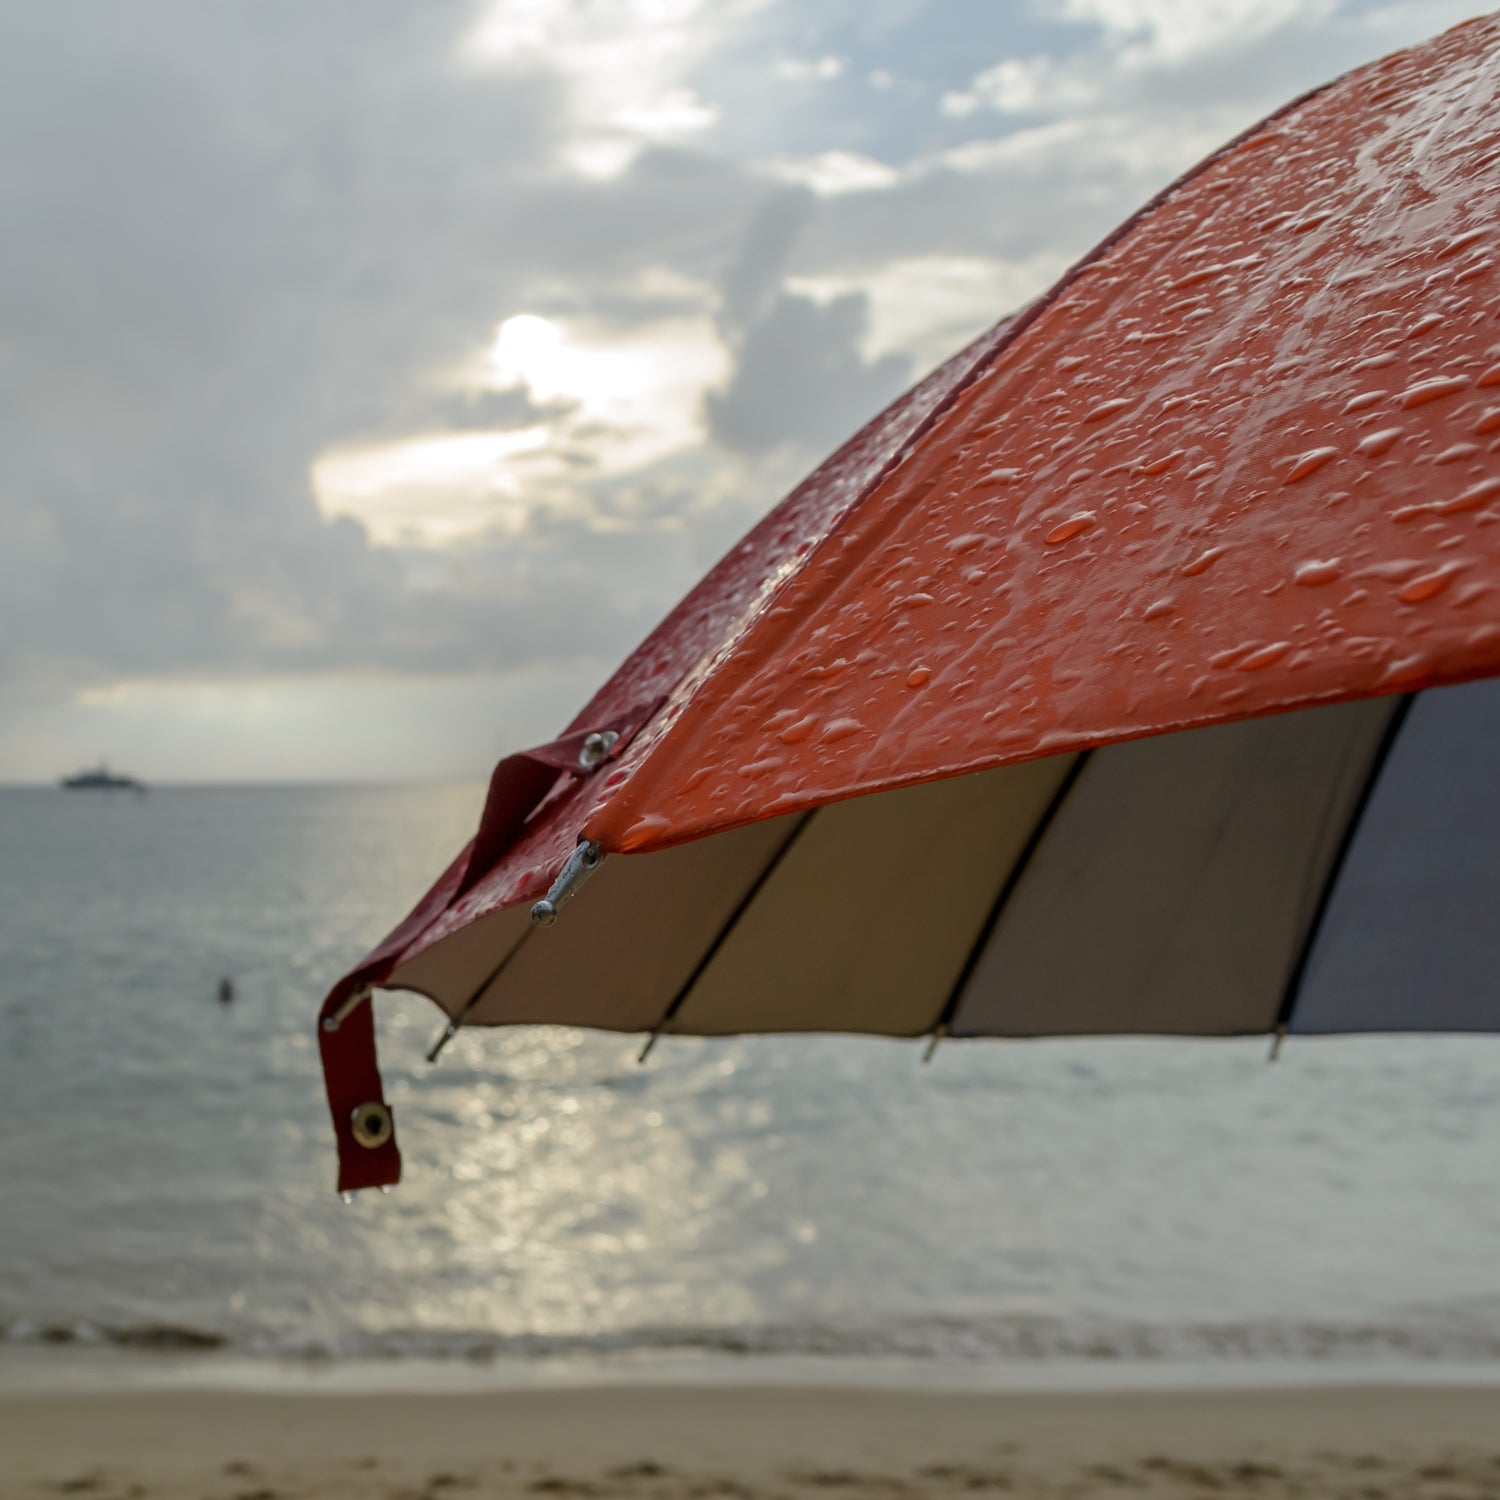 A beach umbrella - inspiration for our "Sea & Sand" fragrance